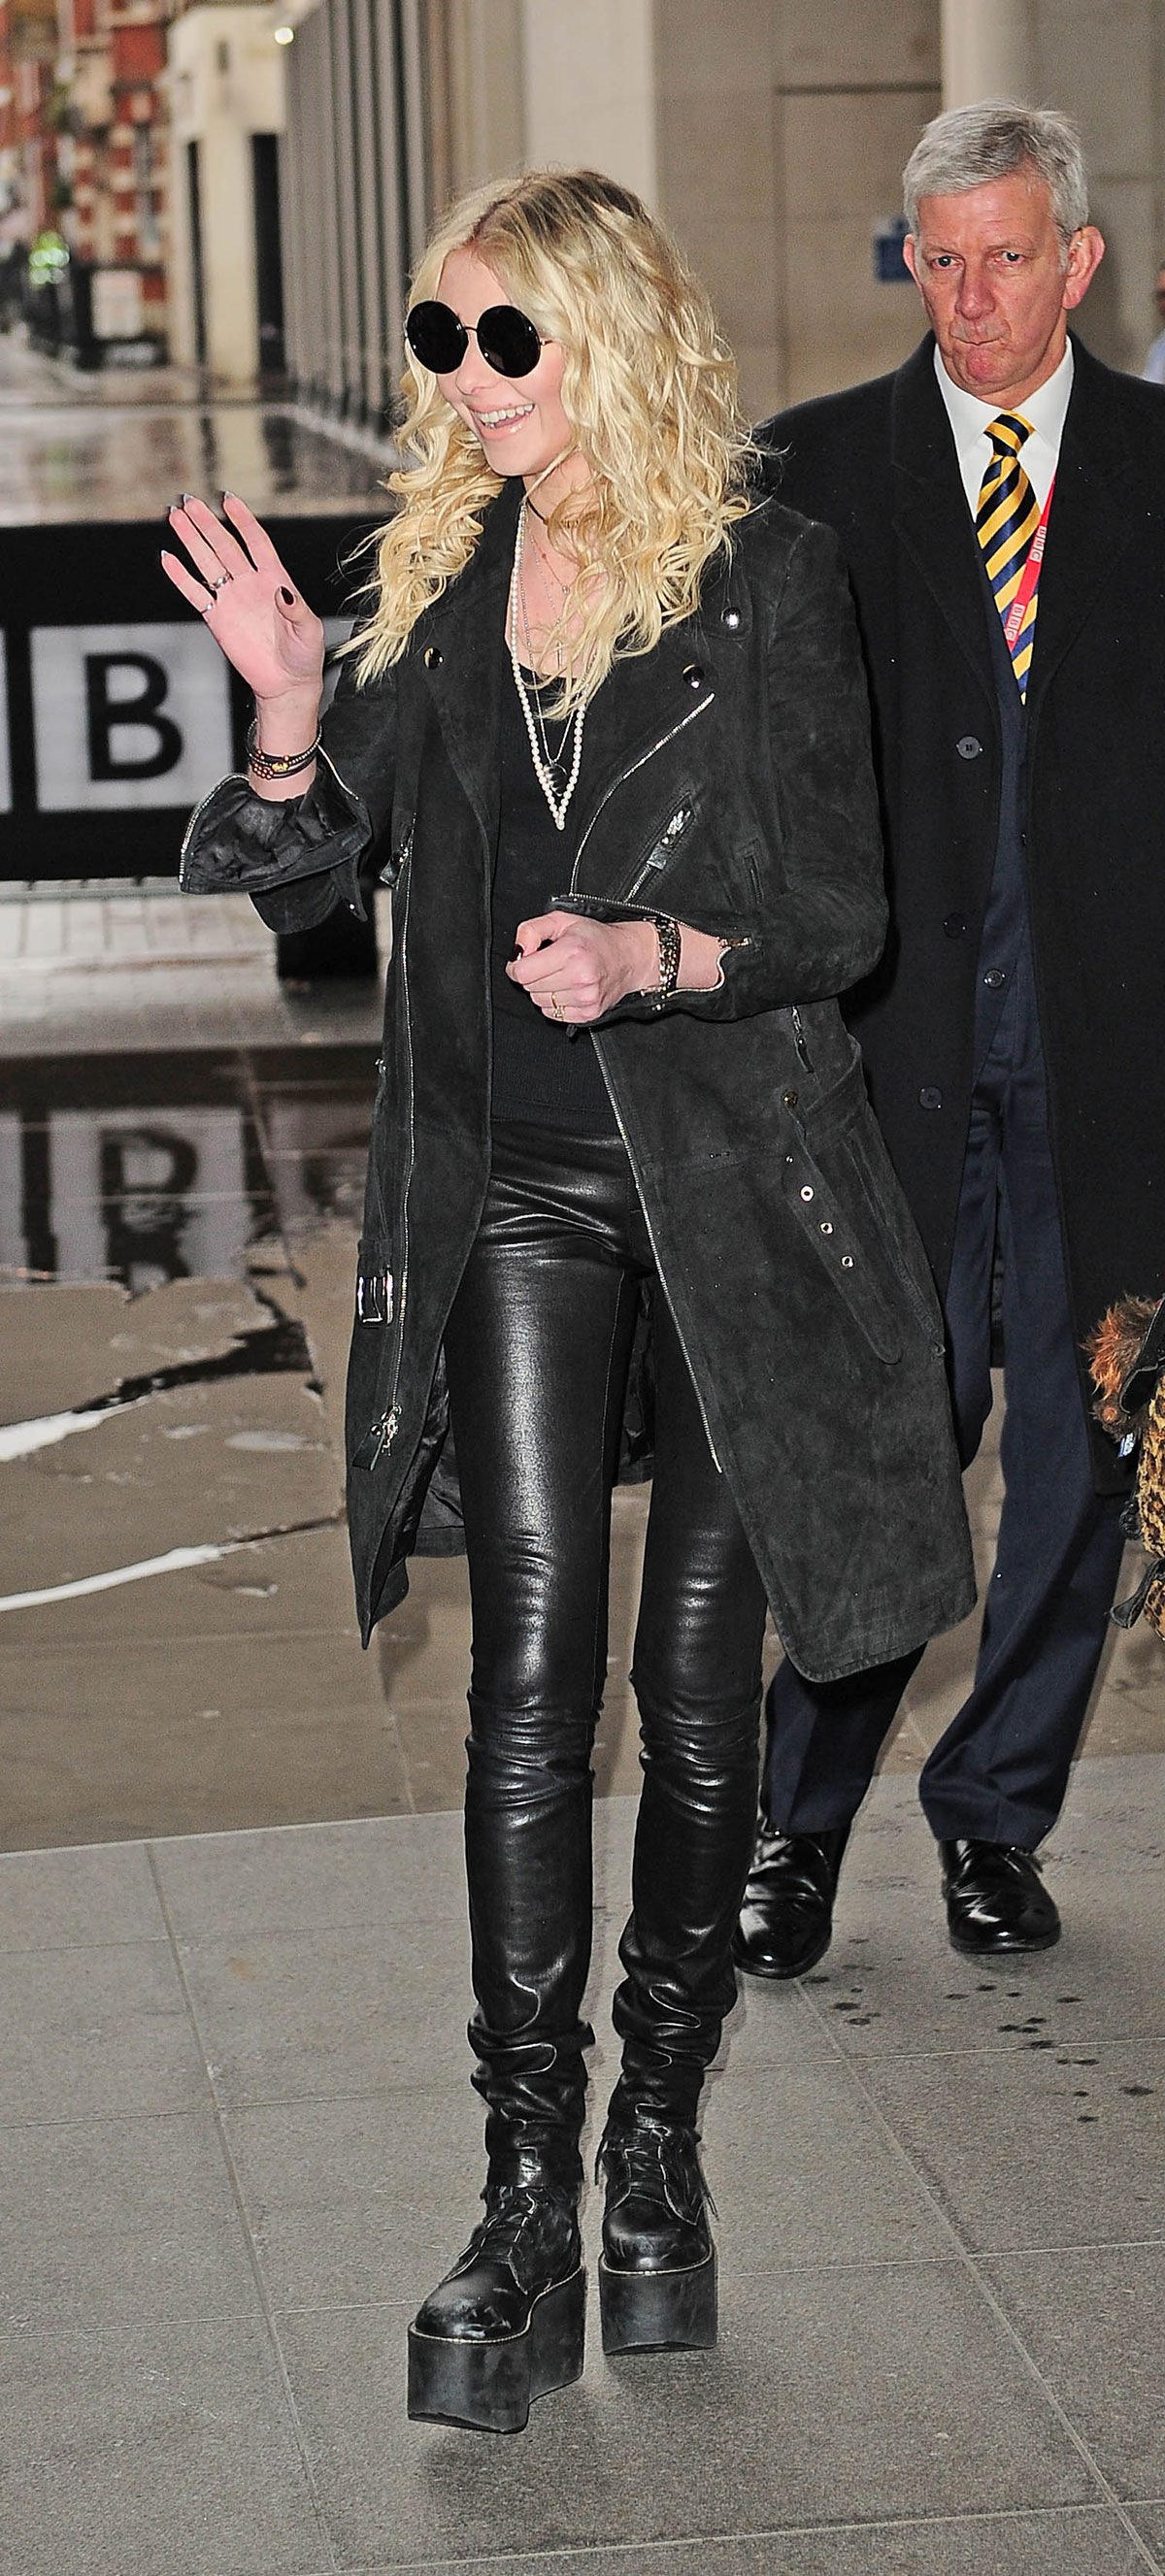 Taylor Momsen arriving at BBC Radio 1 studios